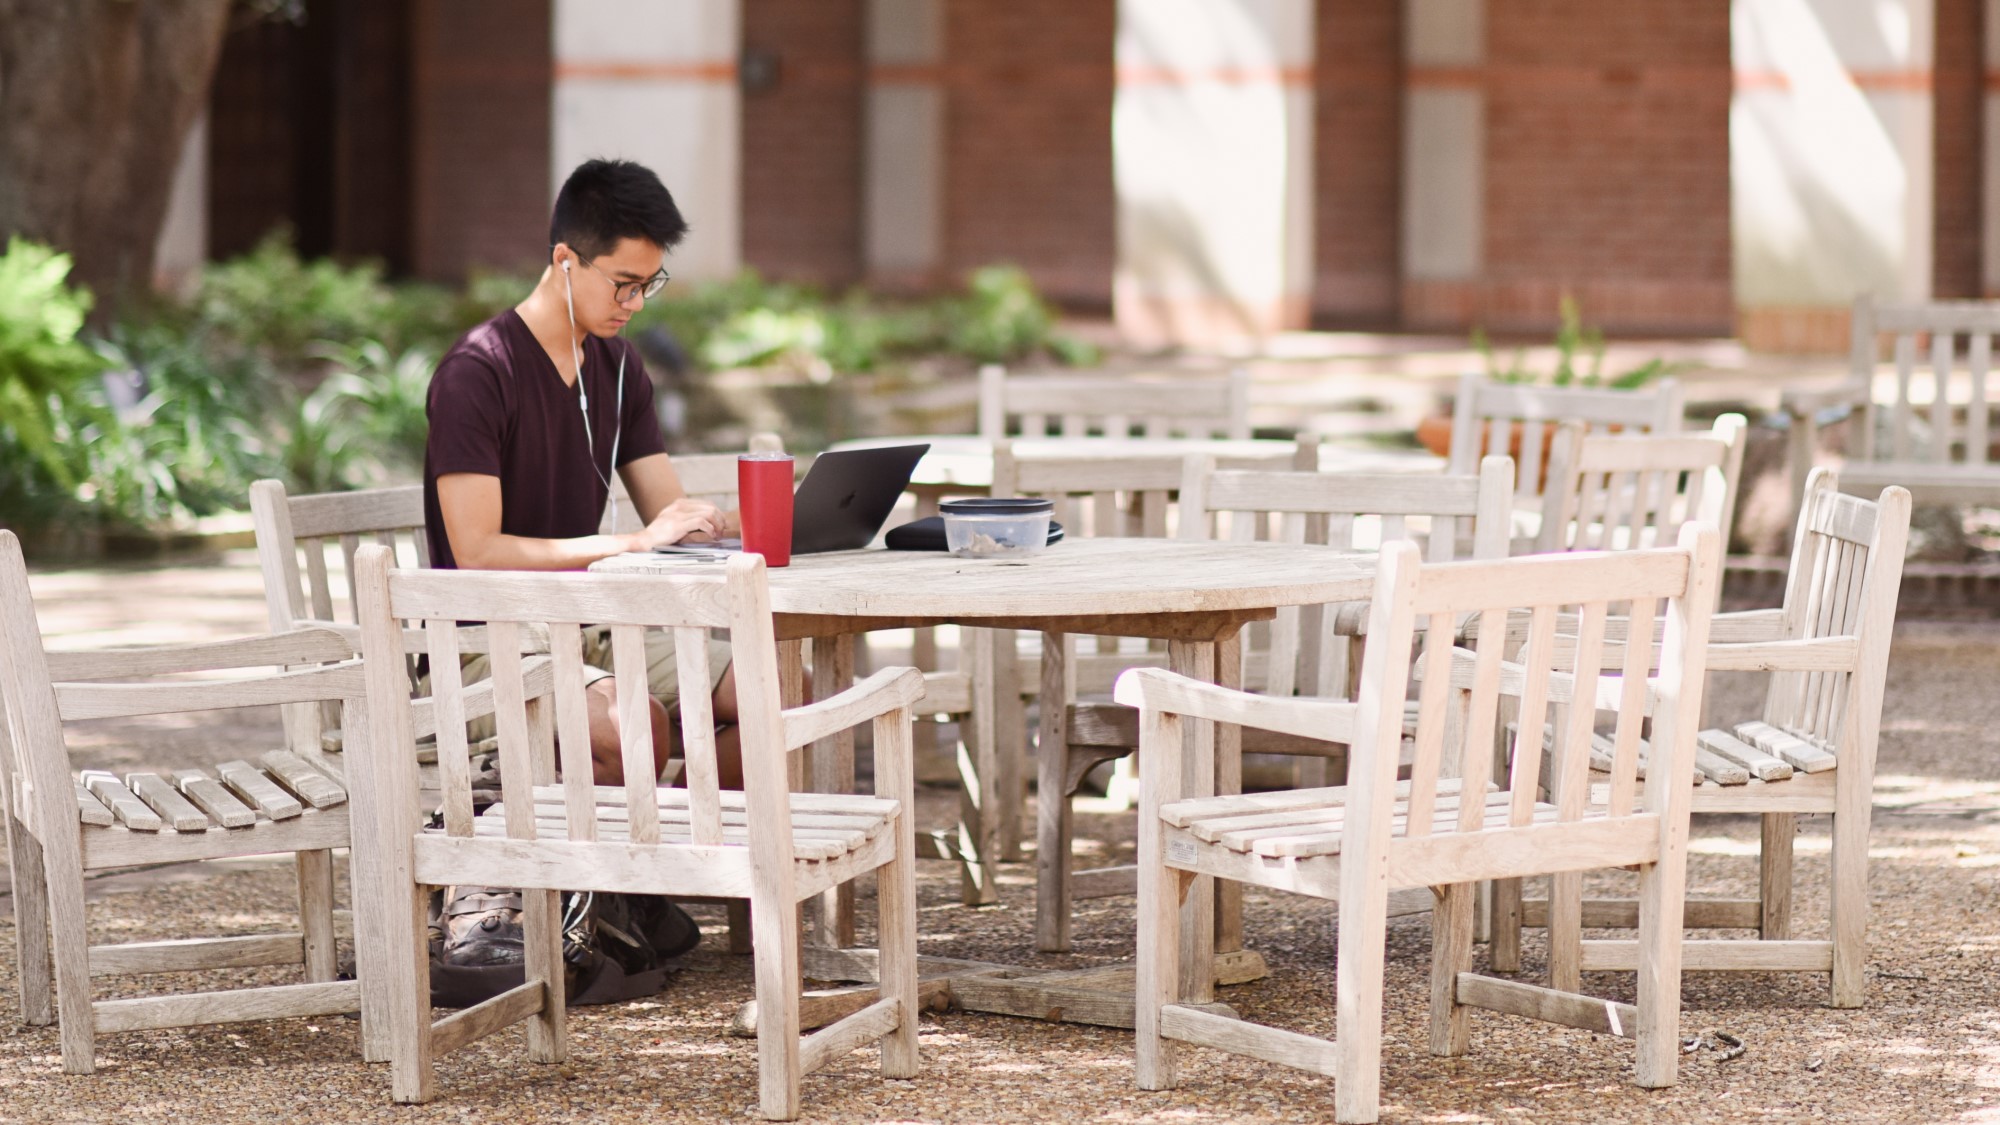 Top Ranked Online MBA | Rice University